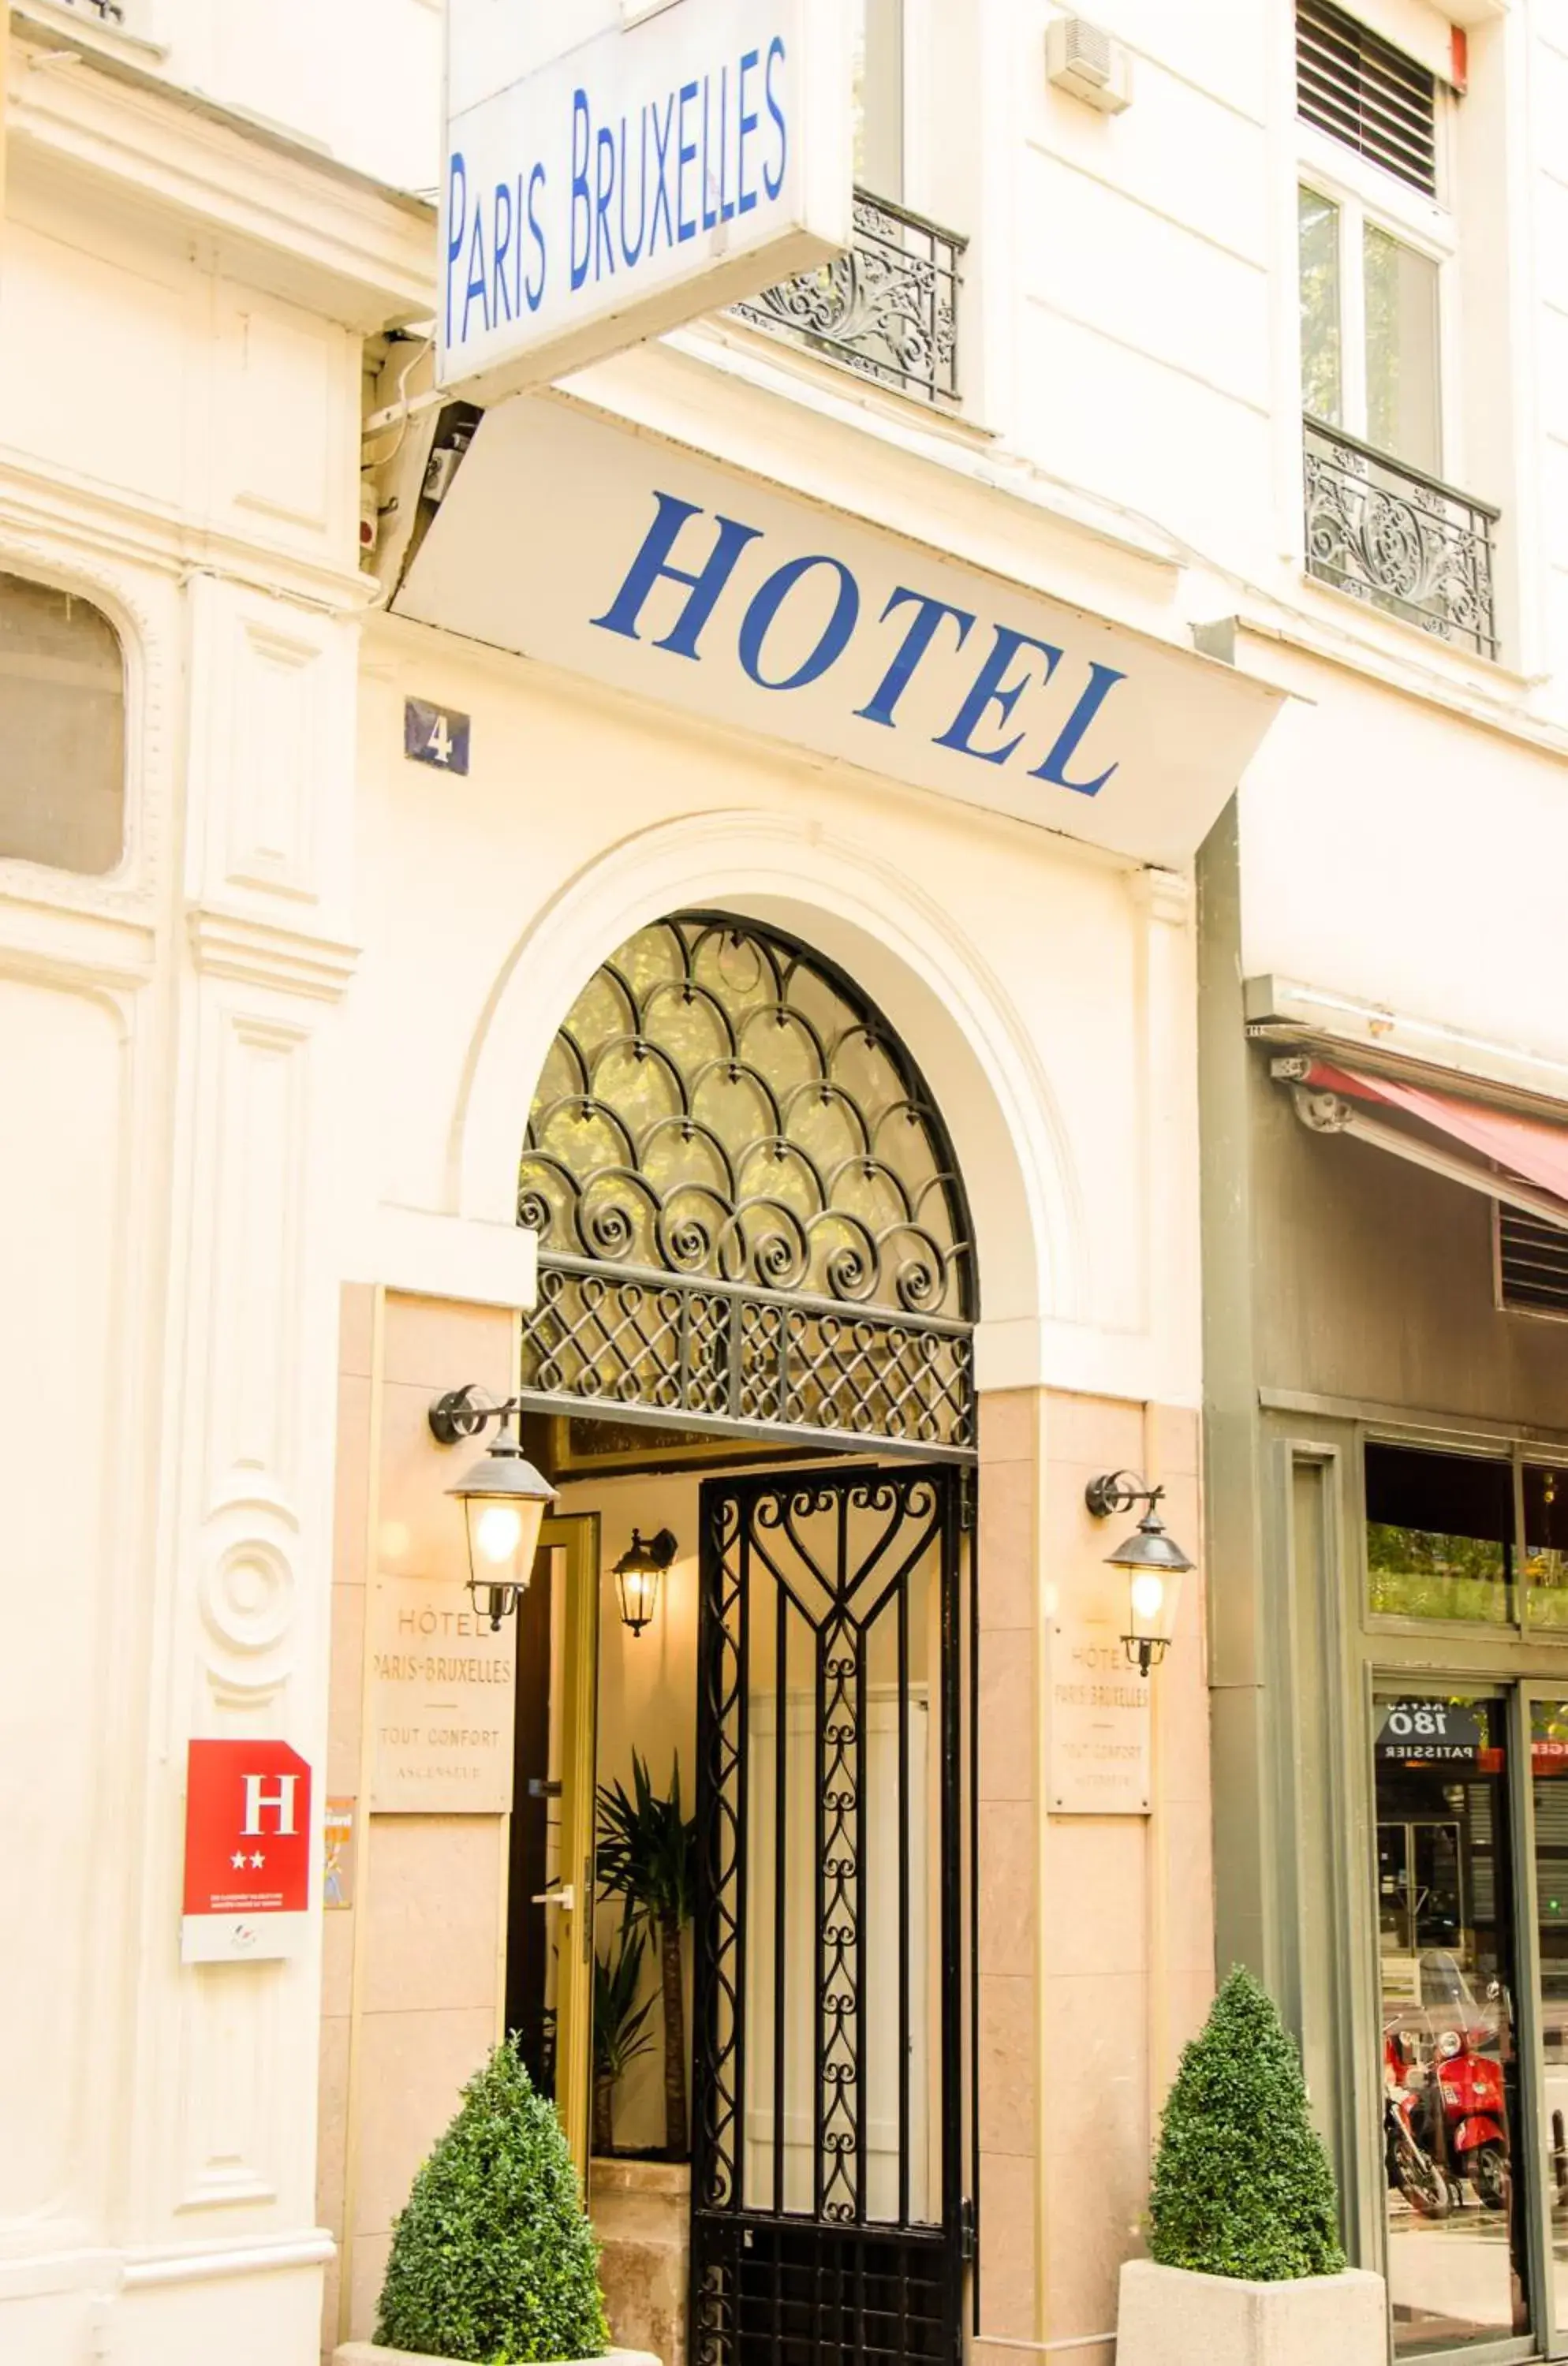 Facade/Entrance in Hotel Paris Bruxelles